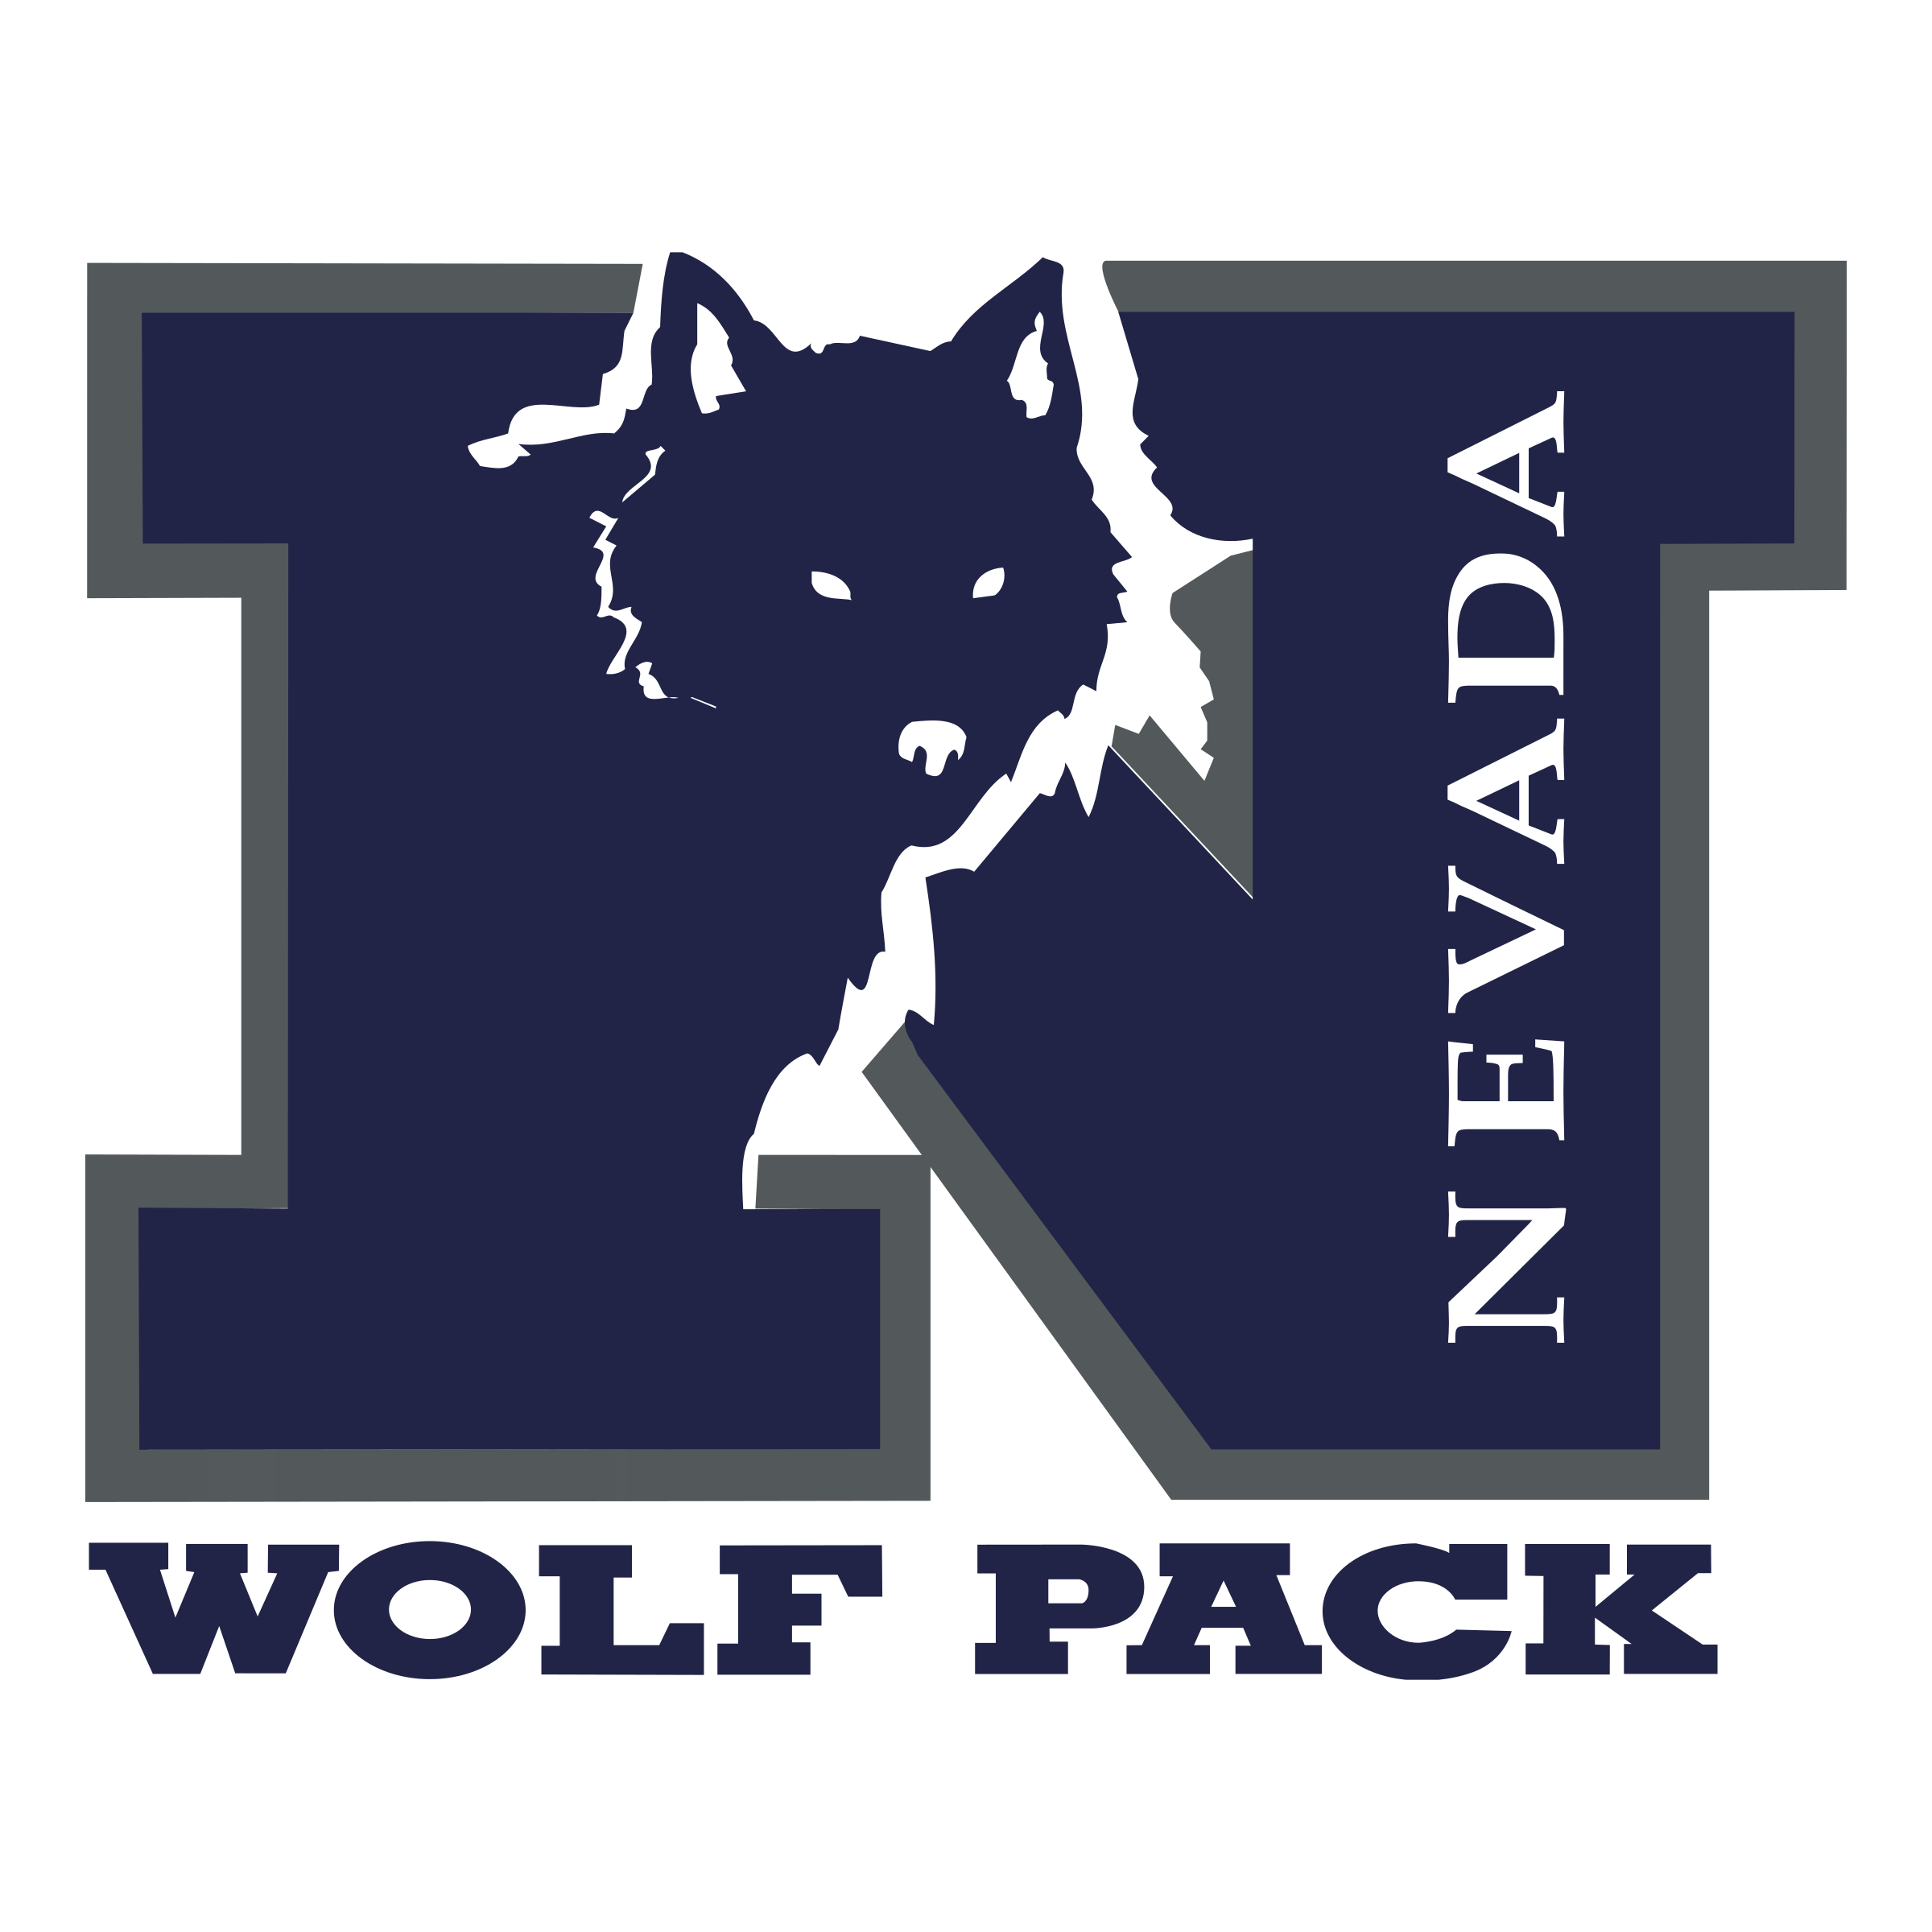 Nevada Logo - Nevada Wolf Pack Logo PNG Transparent & SVG Vector - Freebie Supply